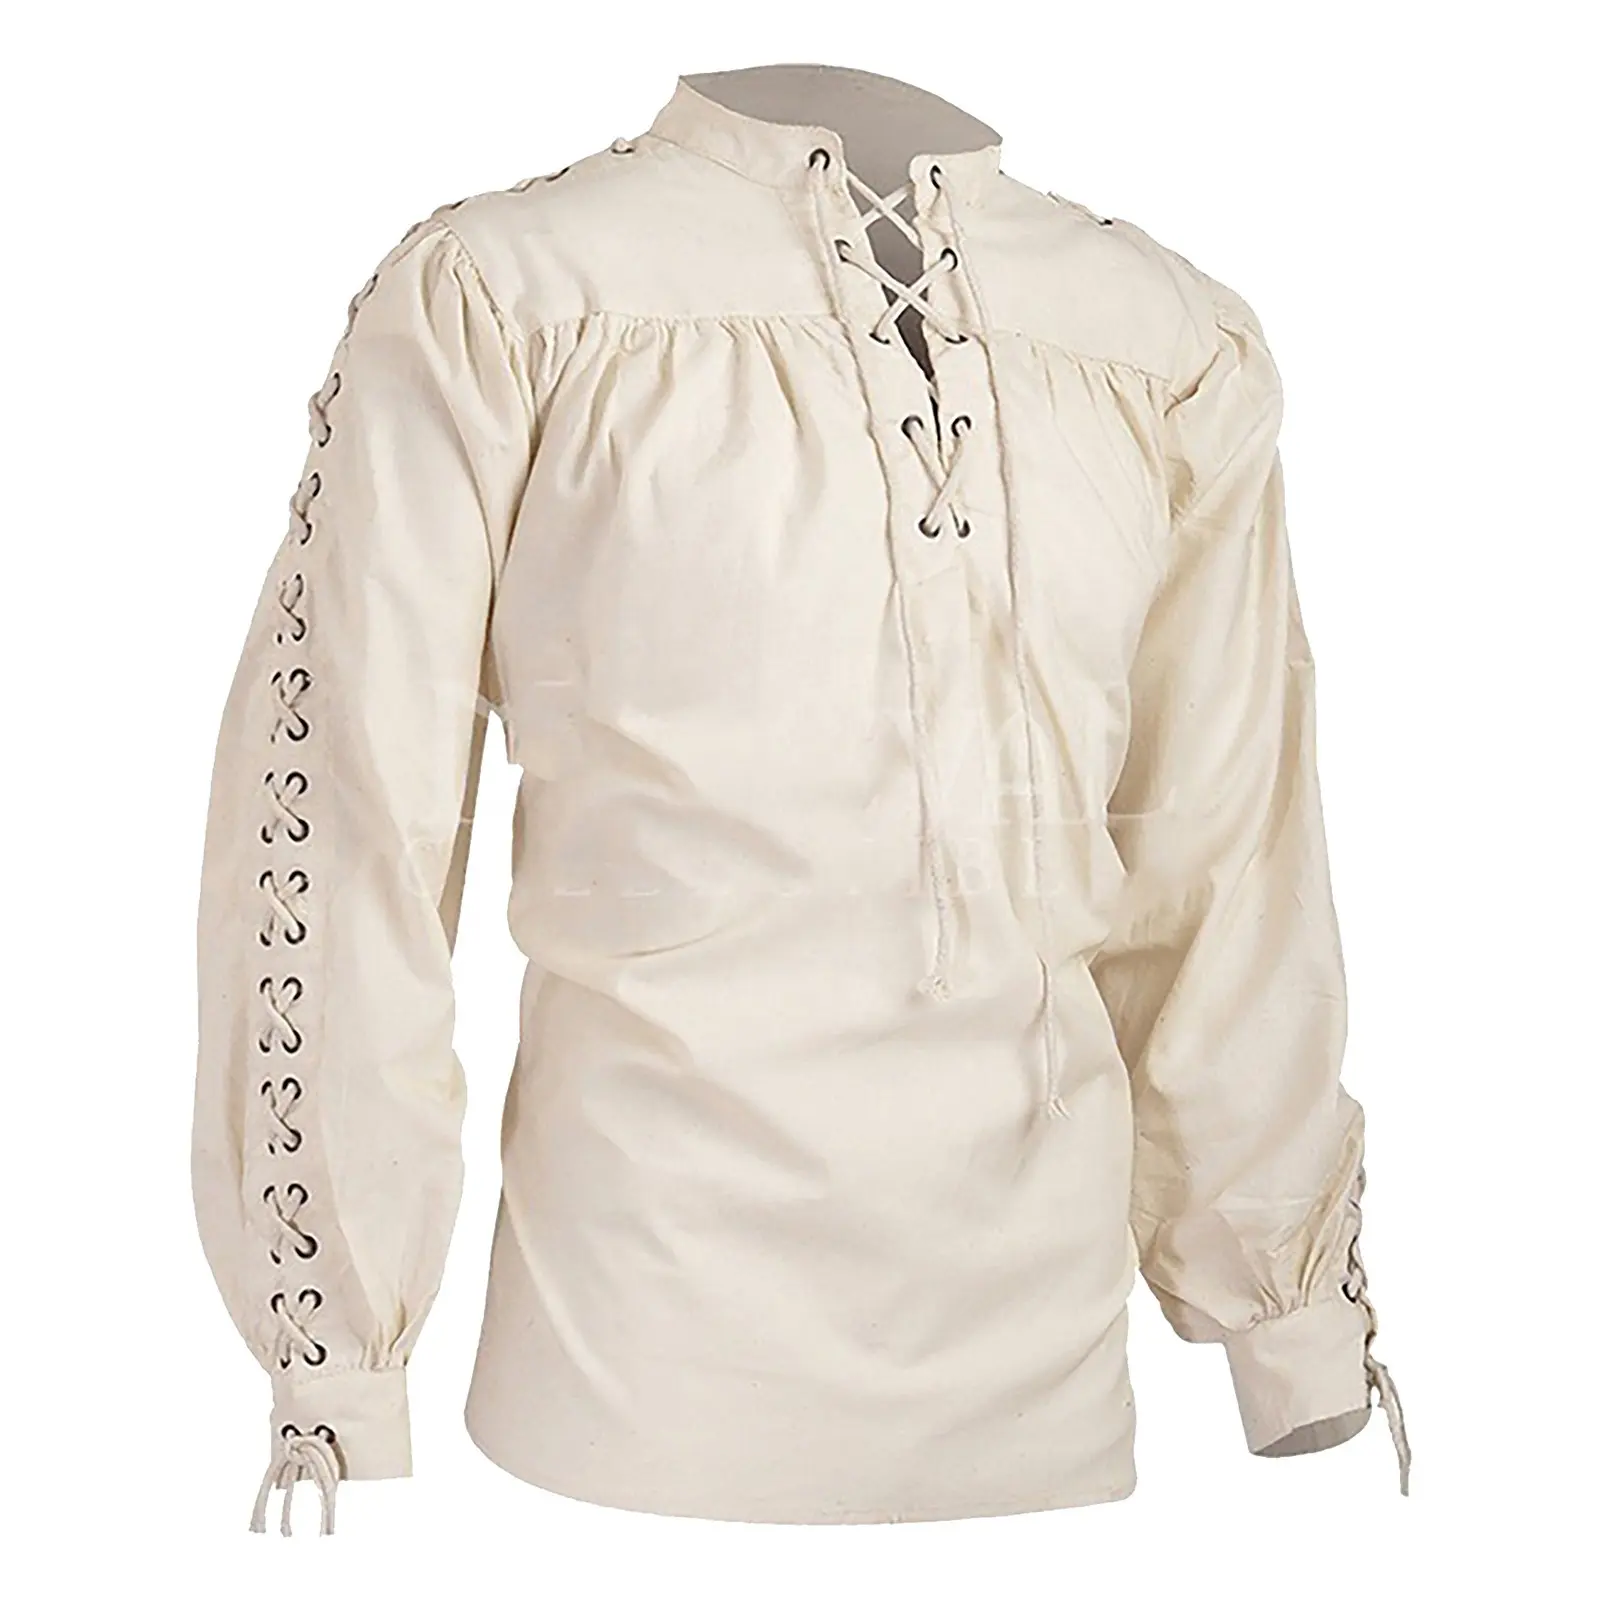 Renaissance Mens Sleeveless Knight Top Shirt Medieval Peasant Pirate Cos Costume